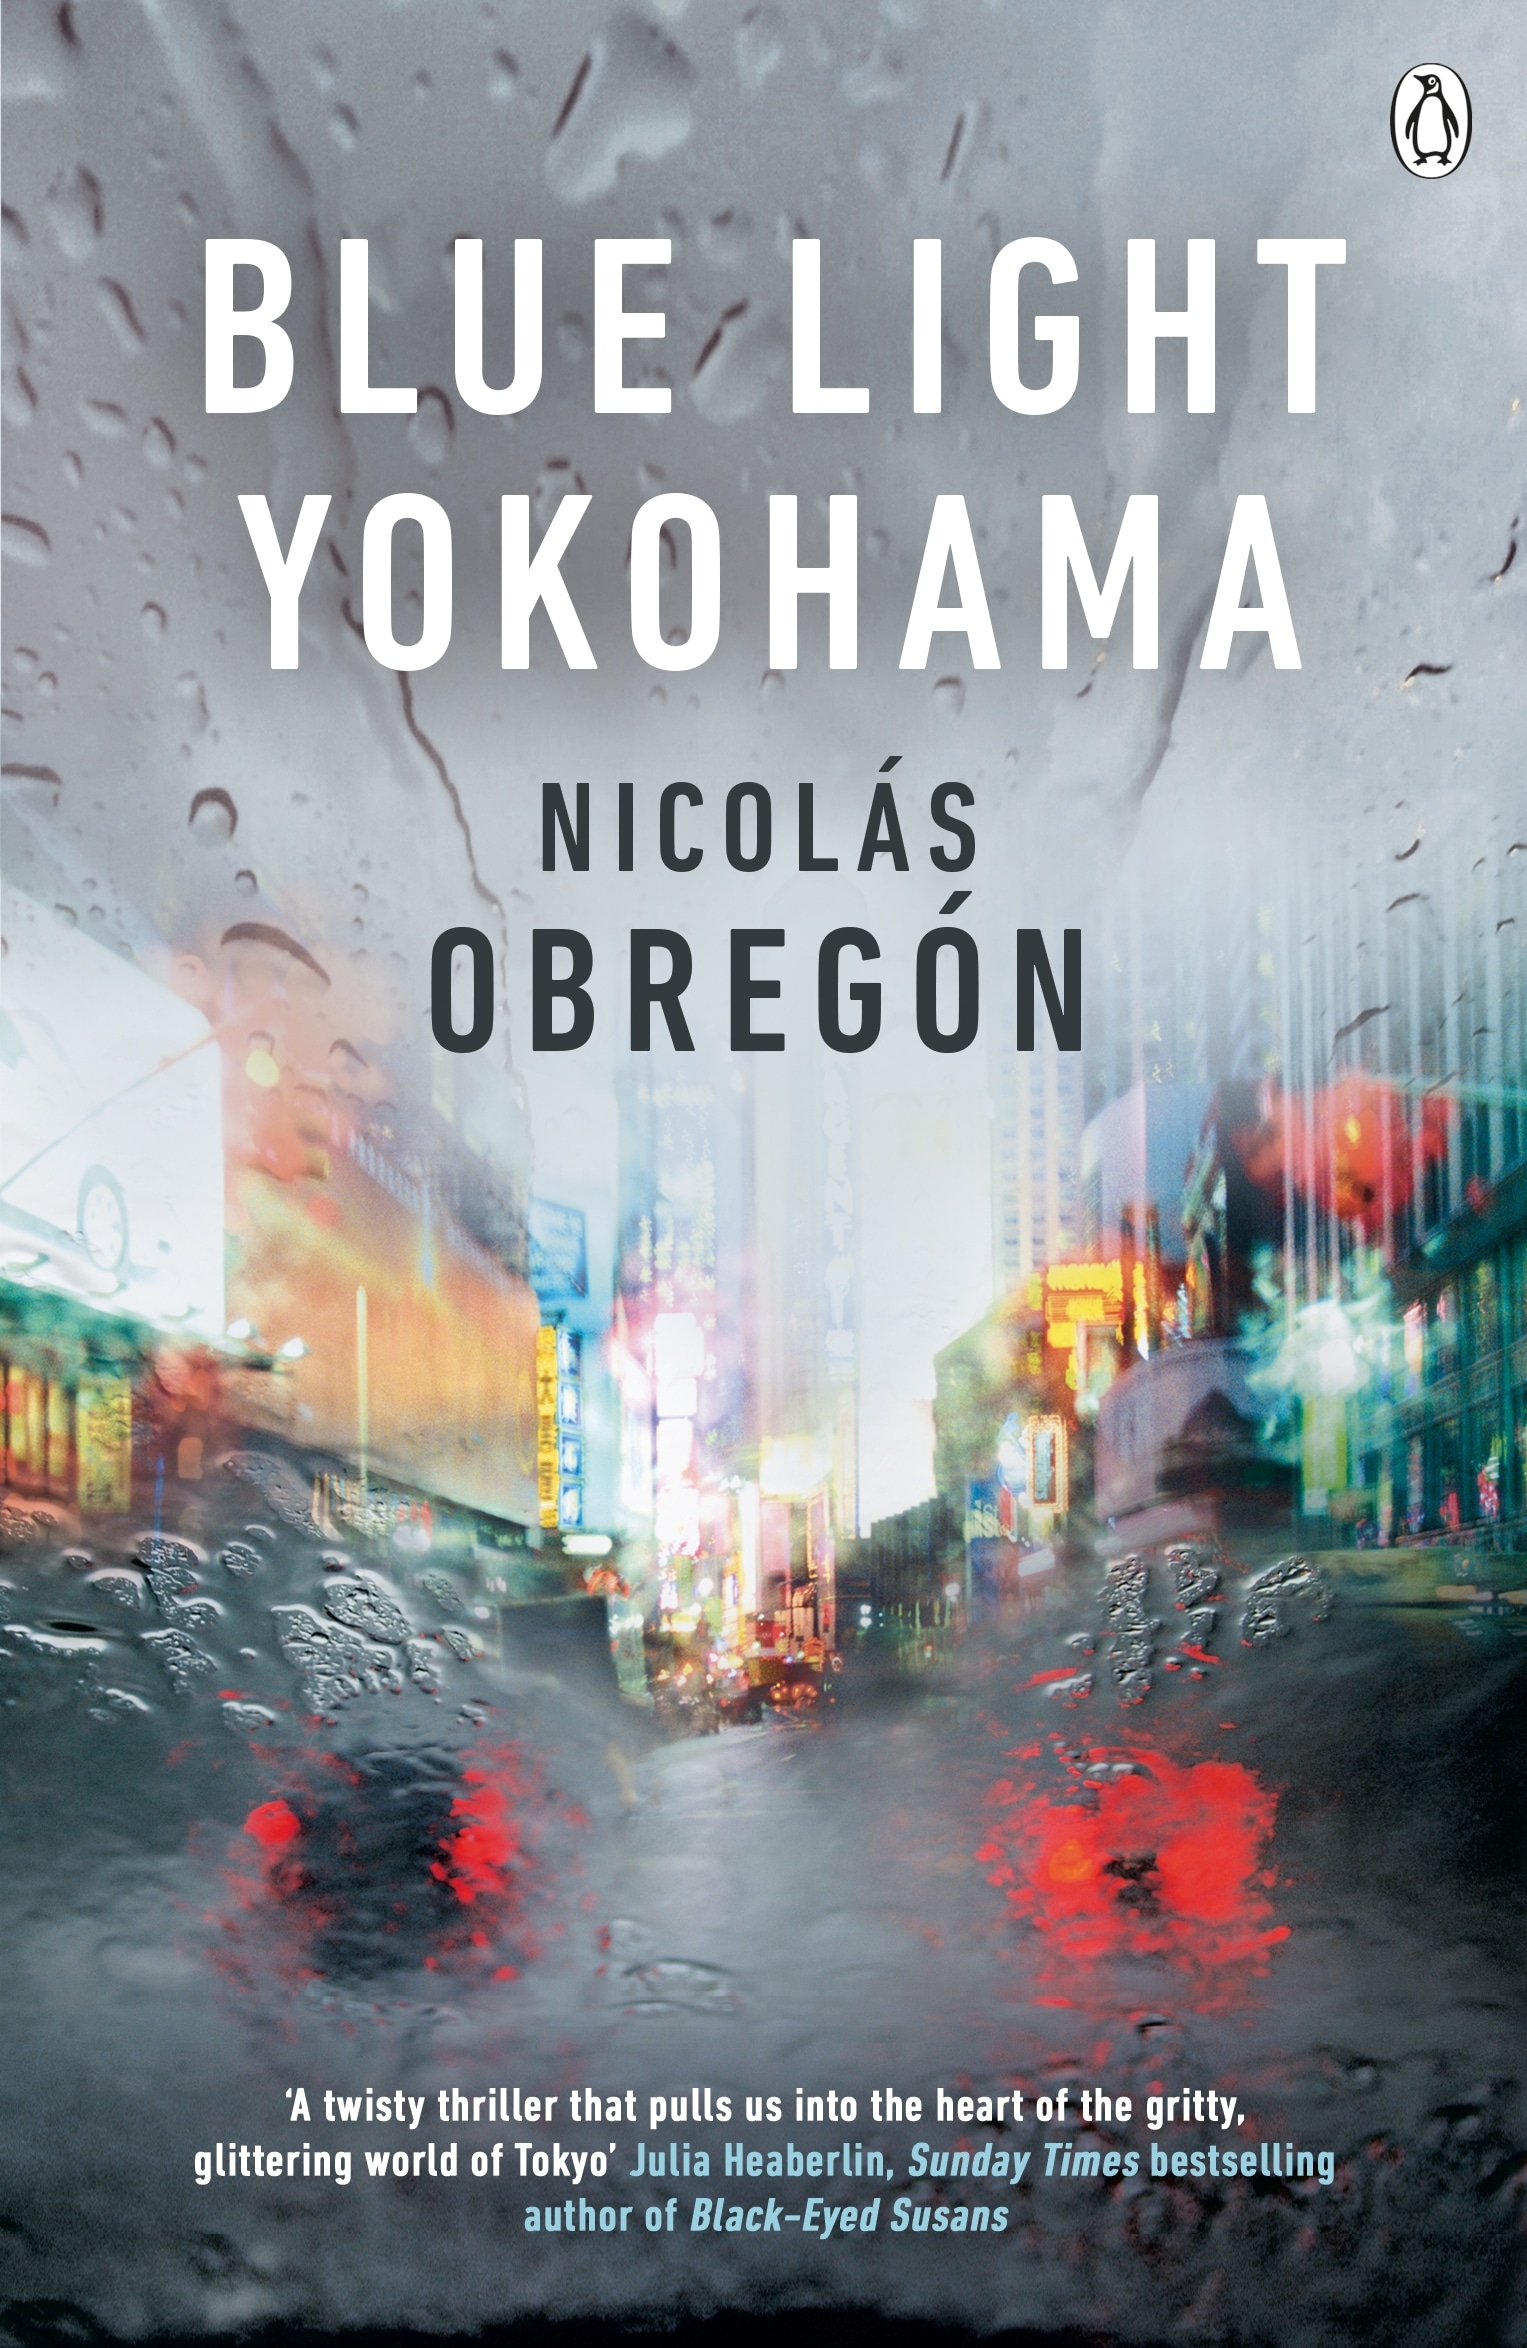 Book “Blue Light Yokohama” by Nicolás Obregón — November 2, 2017